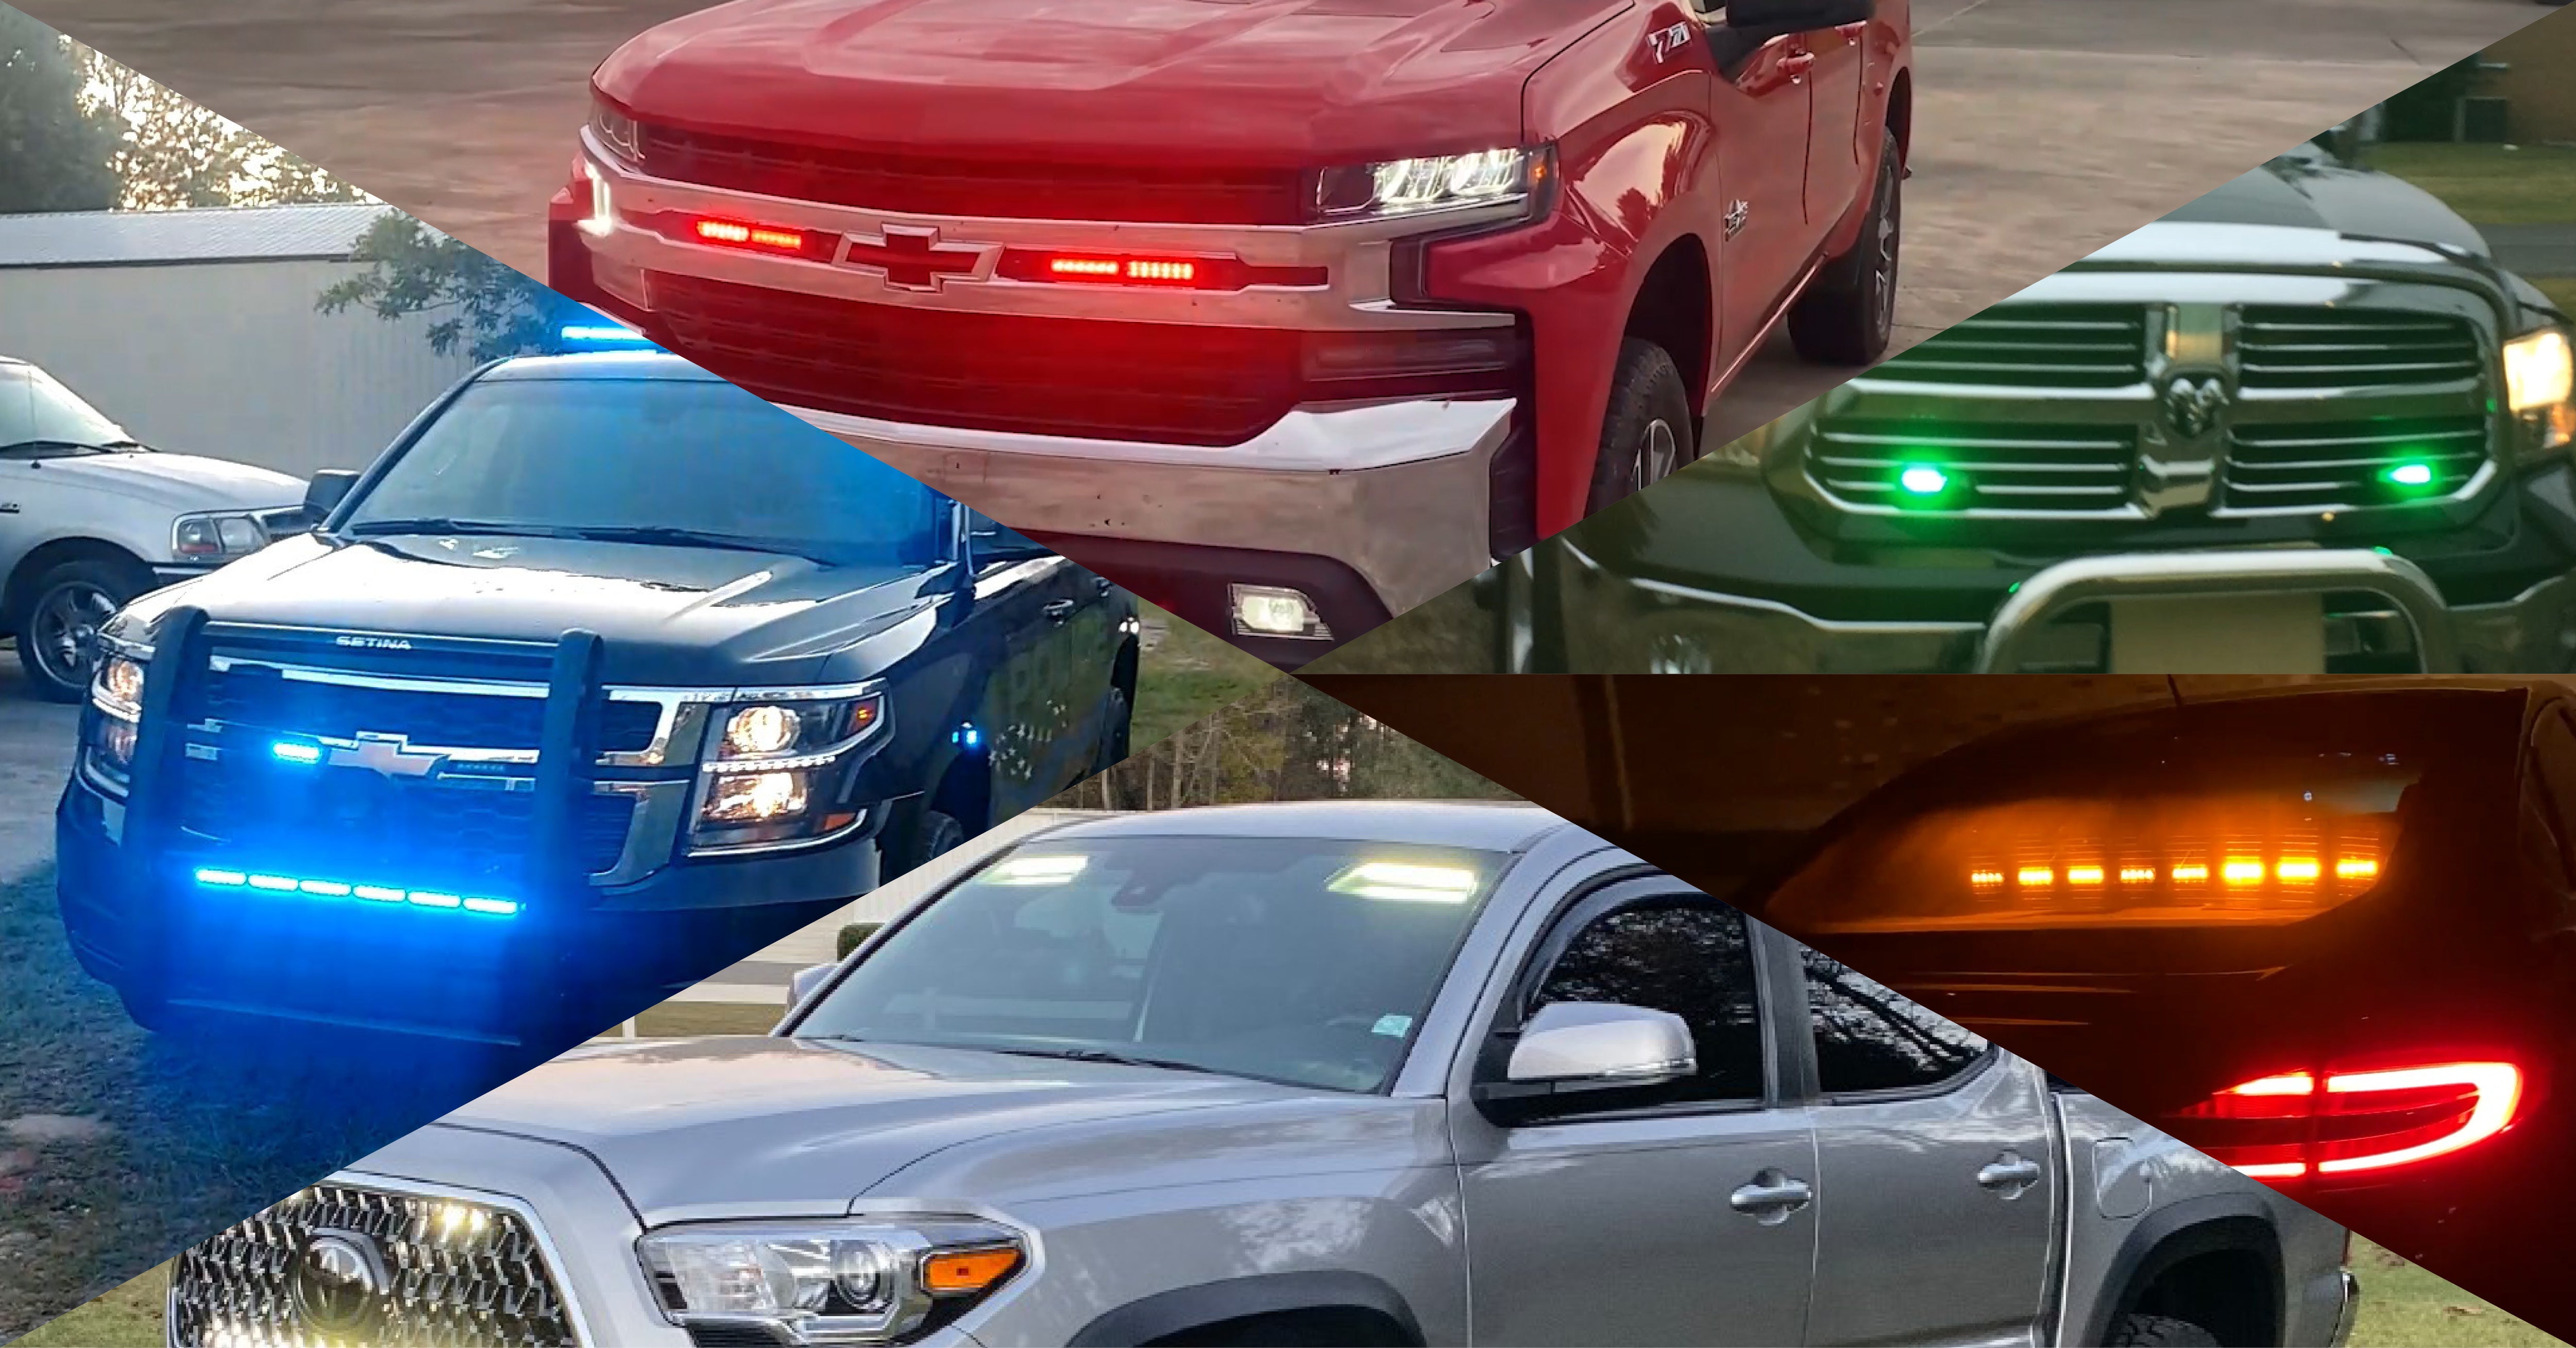 Emergency & Service - Vehicle Lighting